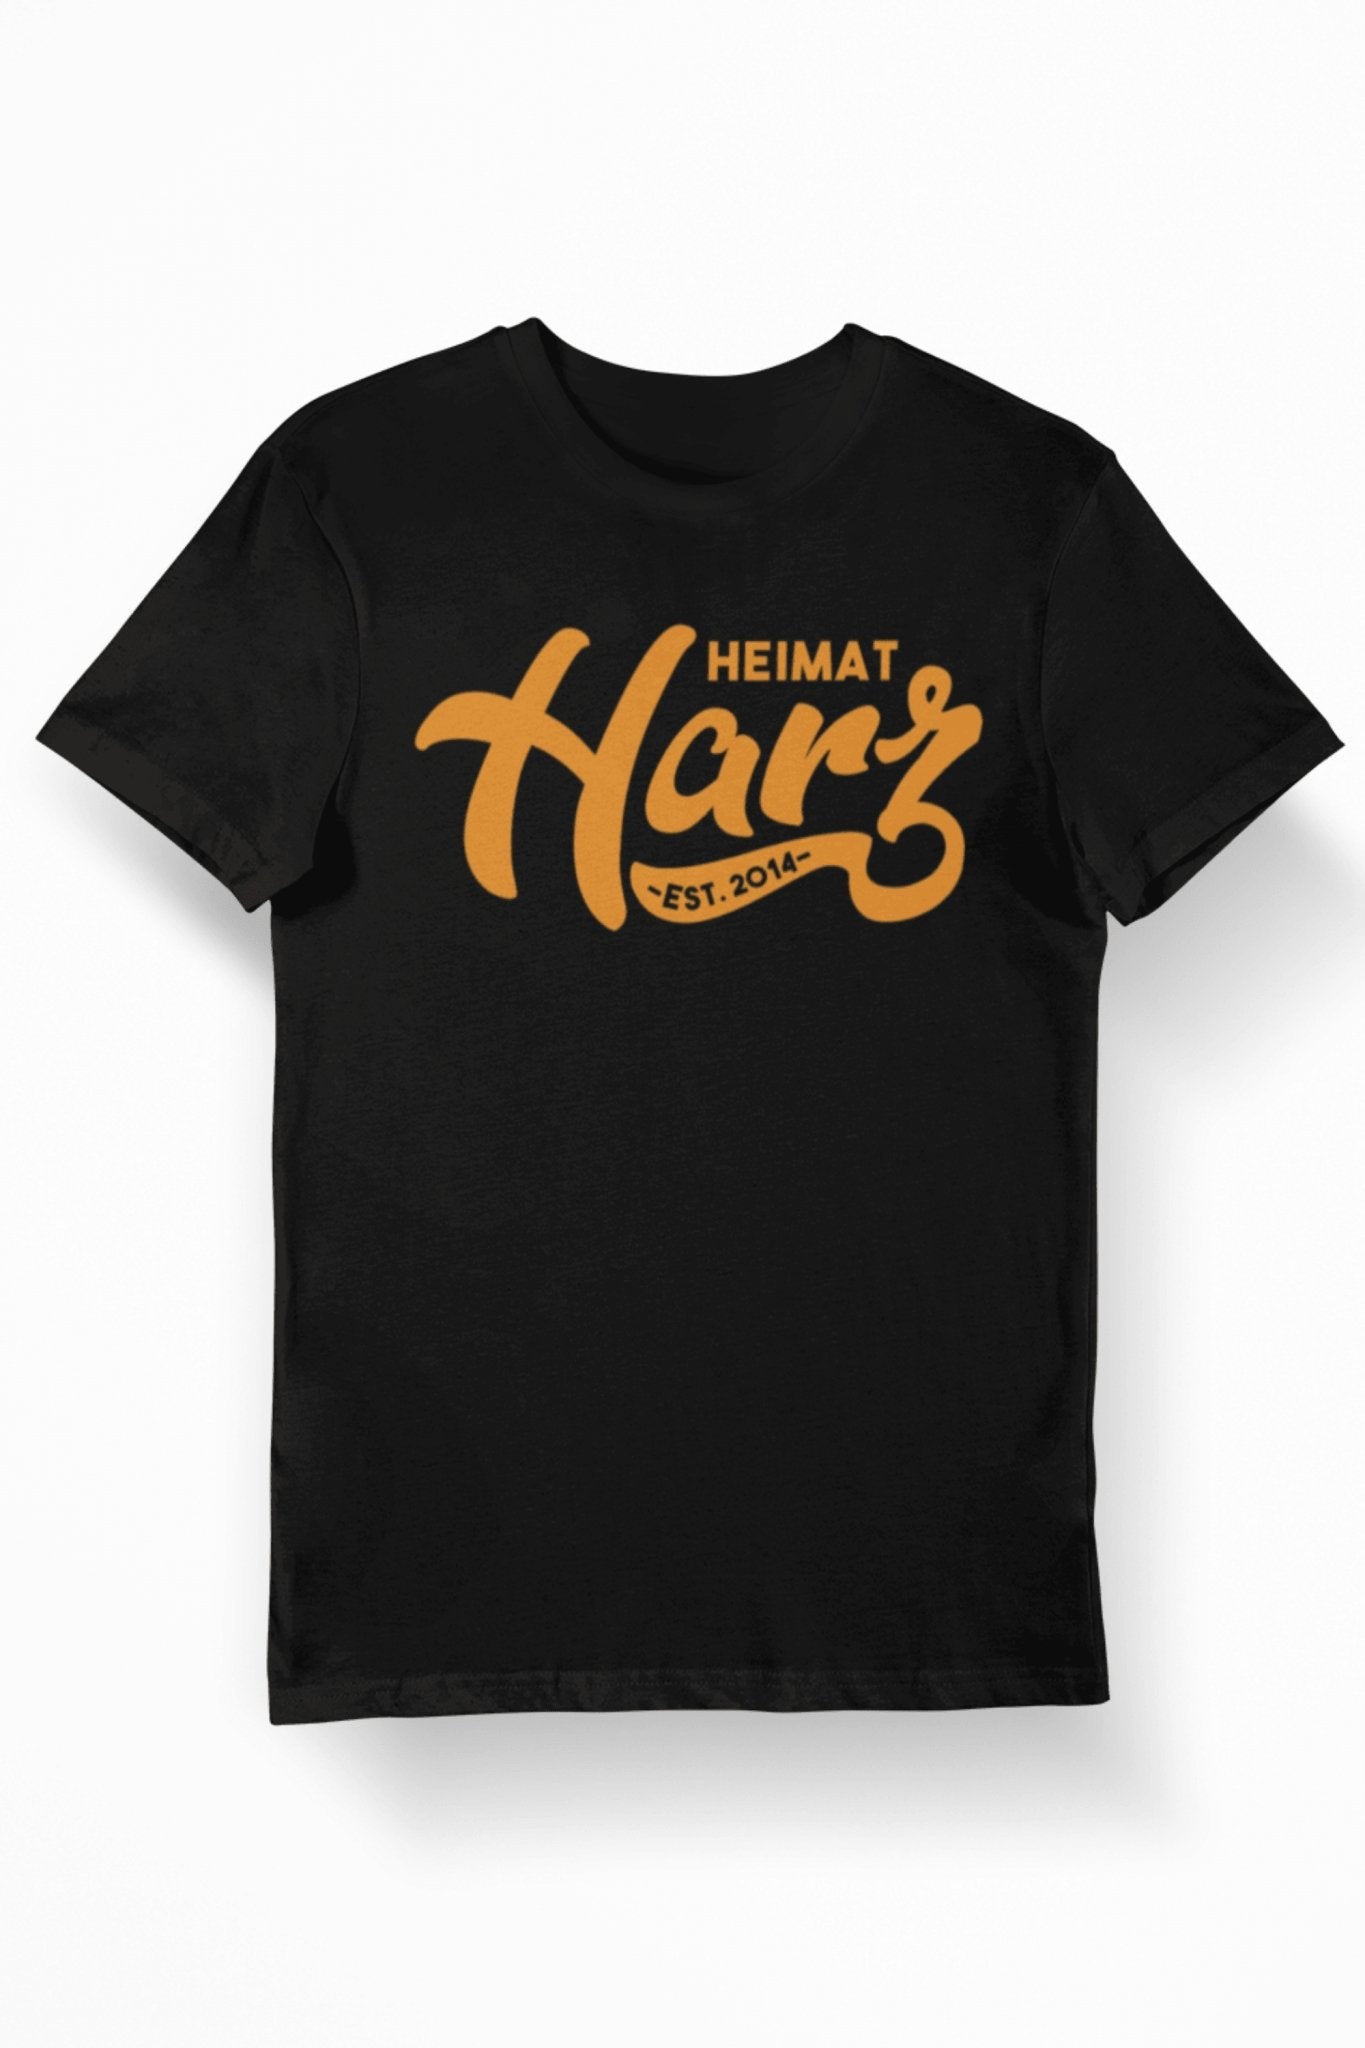 T-Shirt Heimat Harz -EST. 2014- Unisex - Heimat Harz Shop